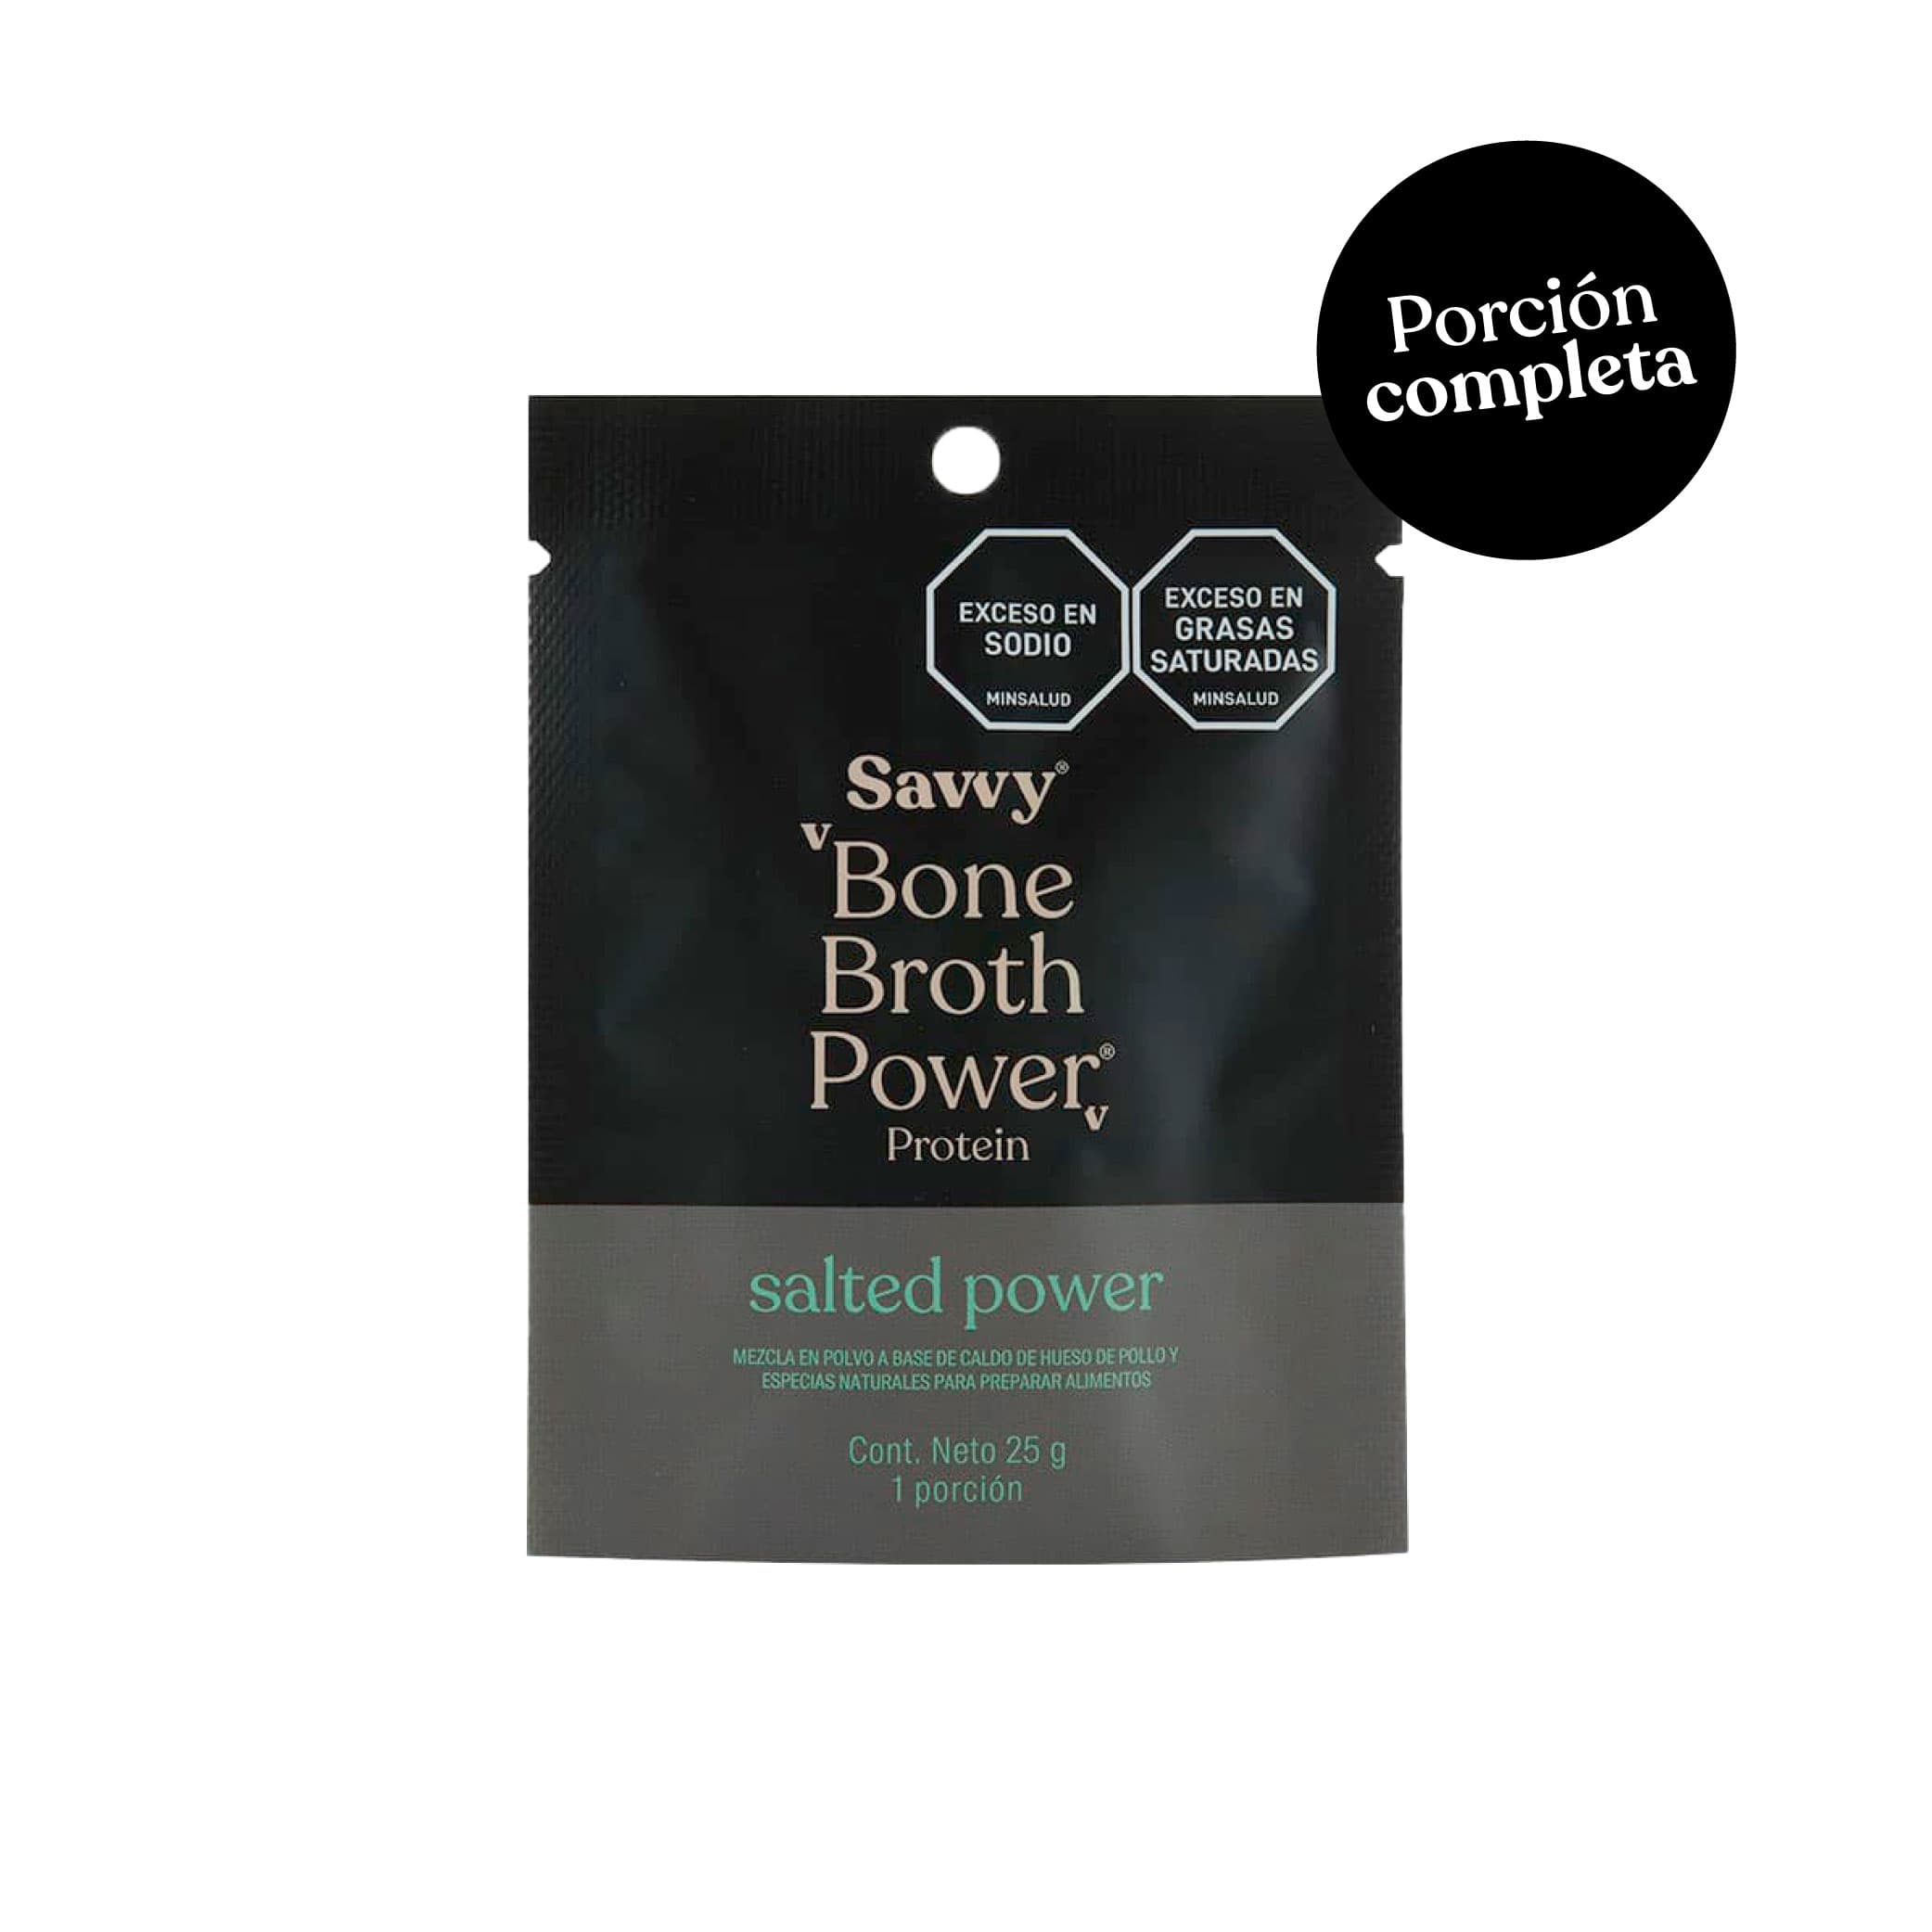 Bone Broth salted power sachet 25gr